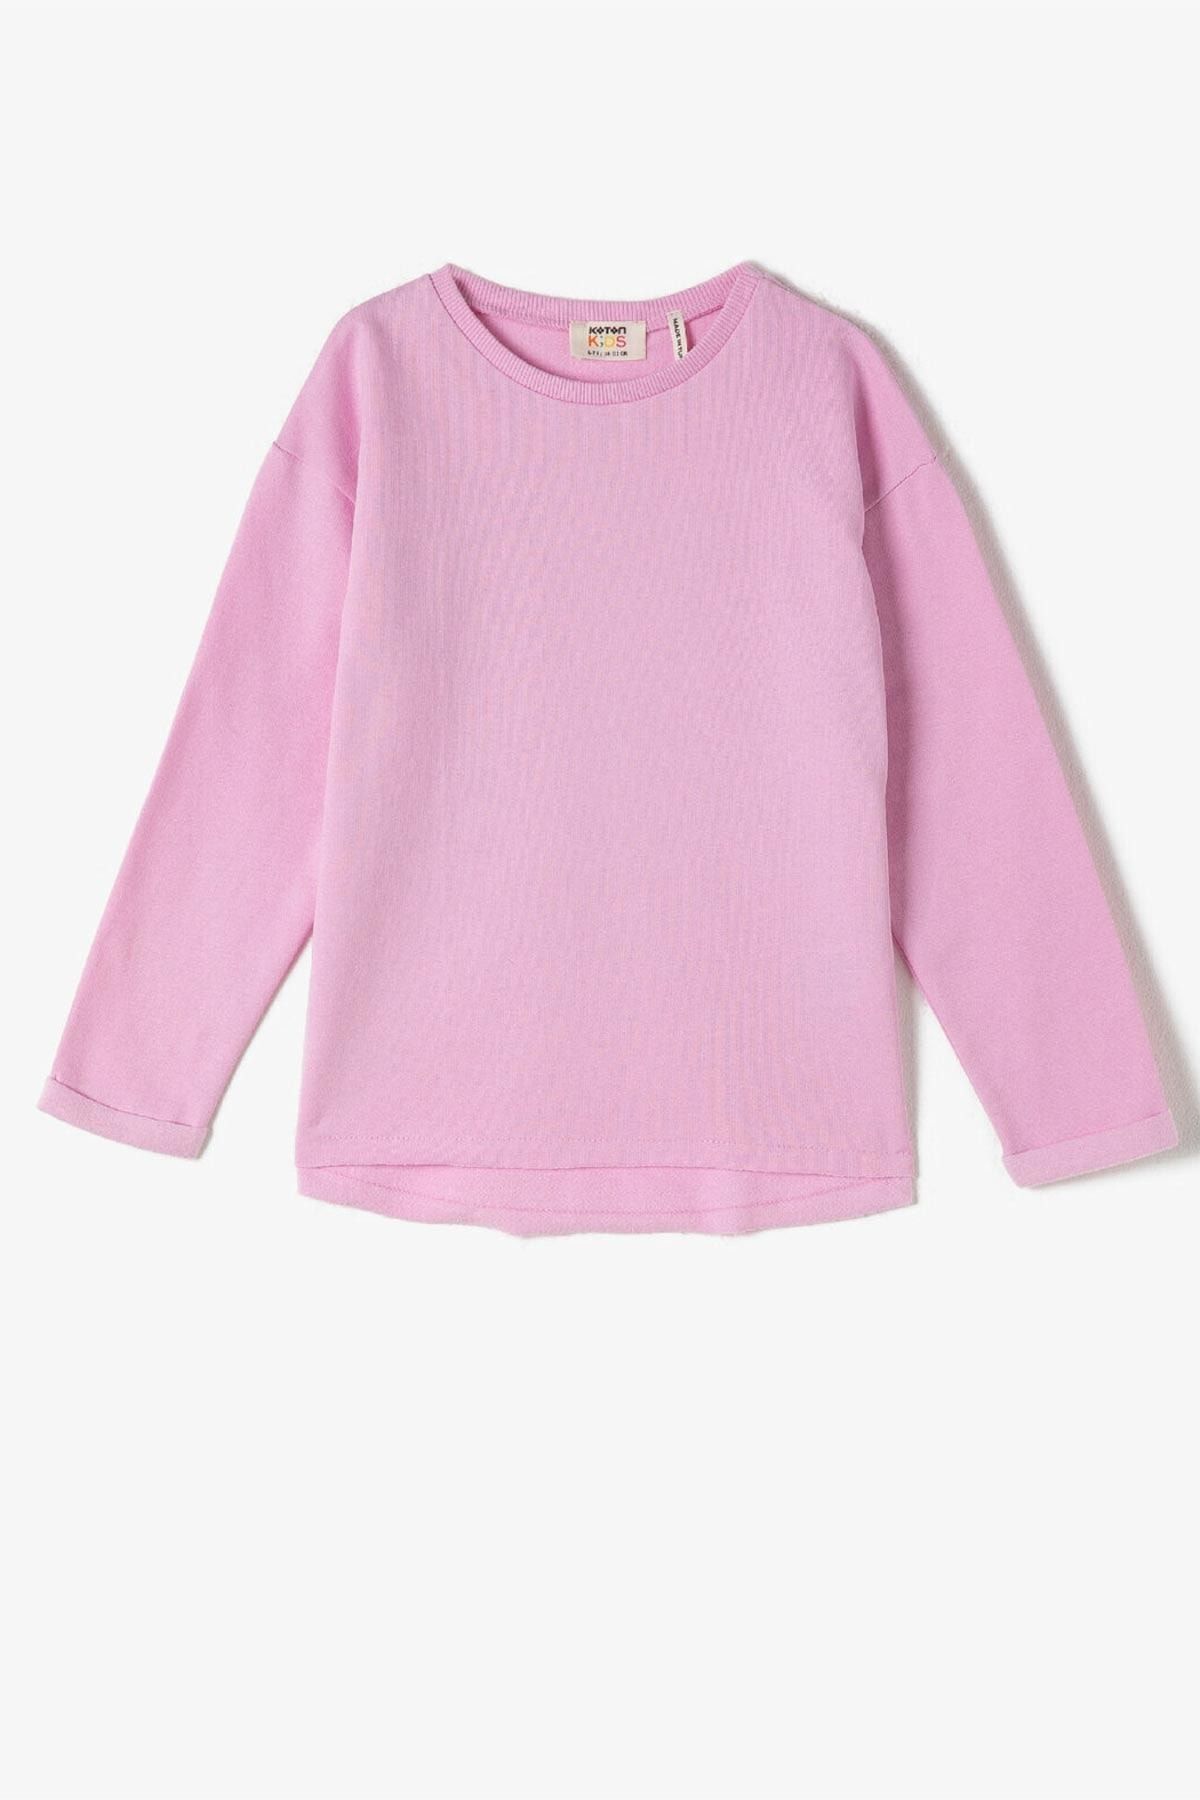 Koton Kız Çocuk Pembe Sweatshirt 1KKG17384OK